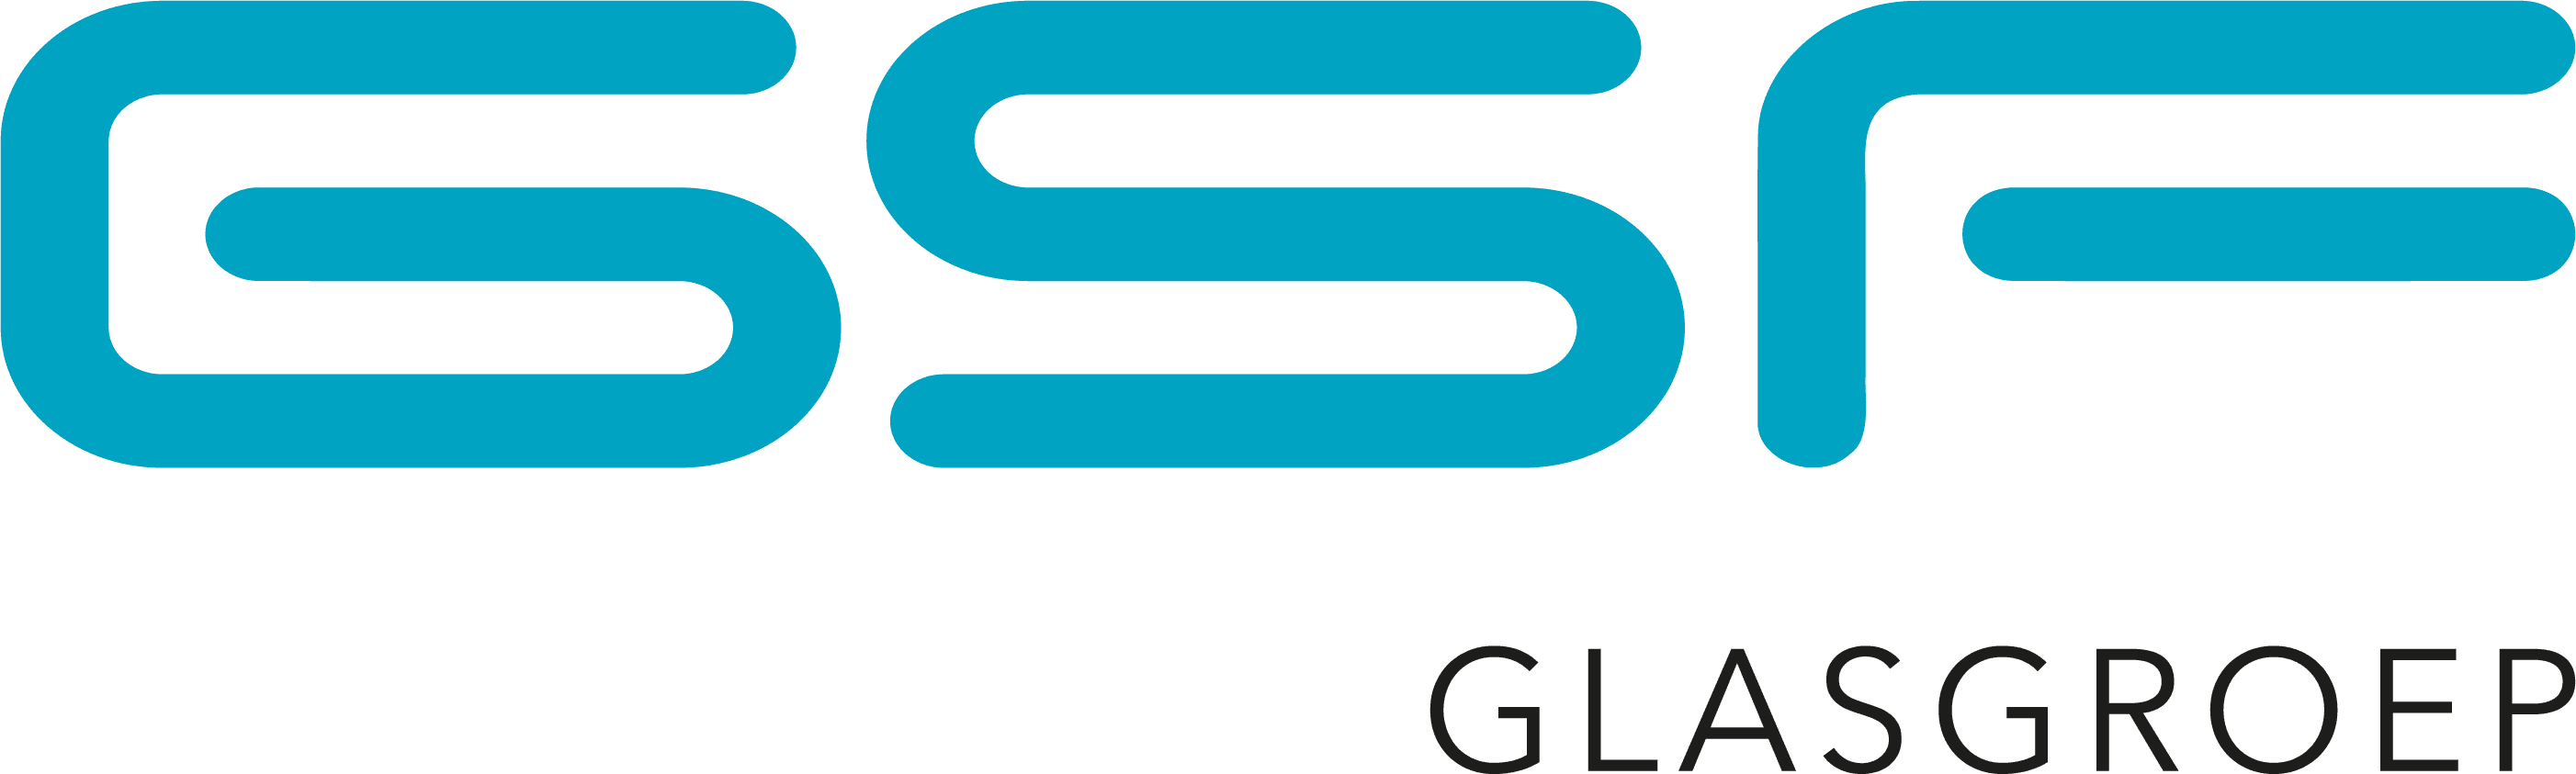 GSF glasgroep